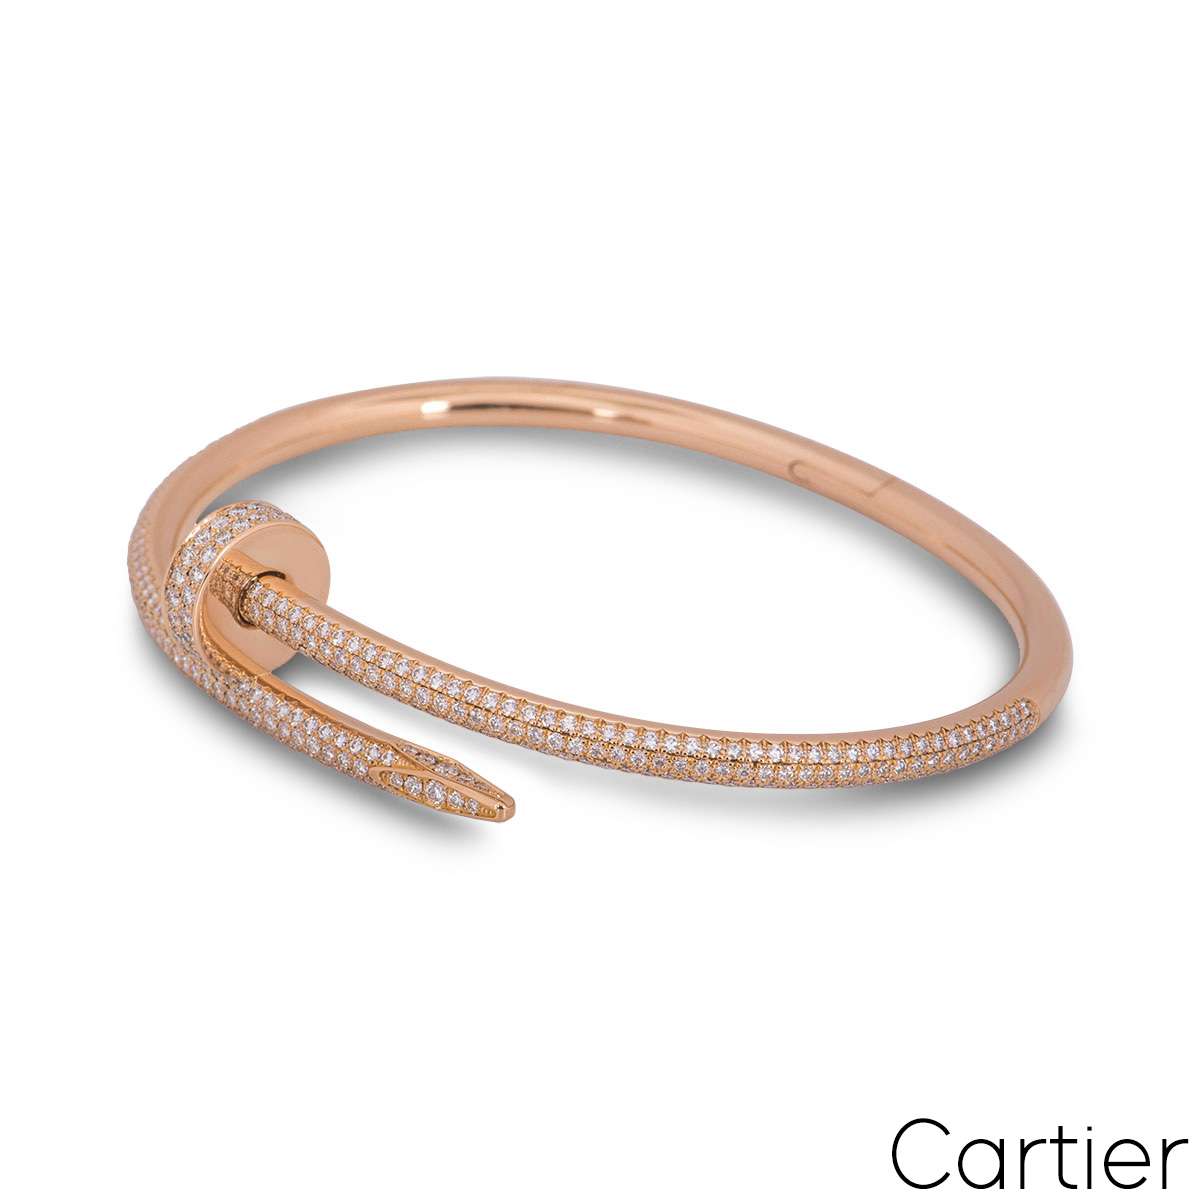 Cartier Rose Gold Diamond Juste Un Clou Bracelet Size 17 N6702117